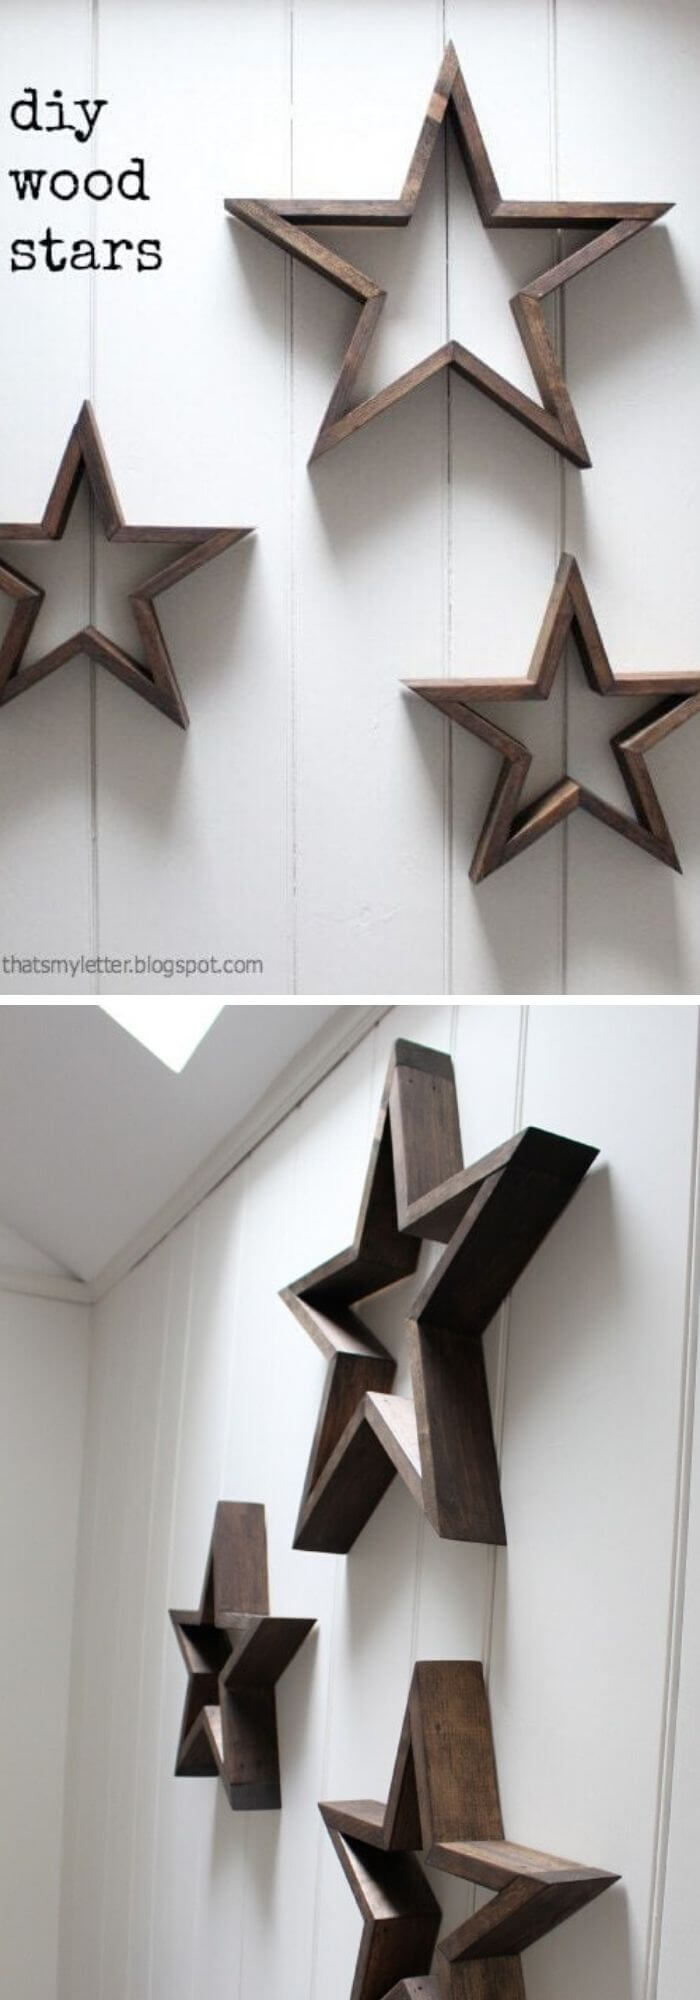 Wooden stars